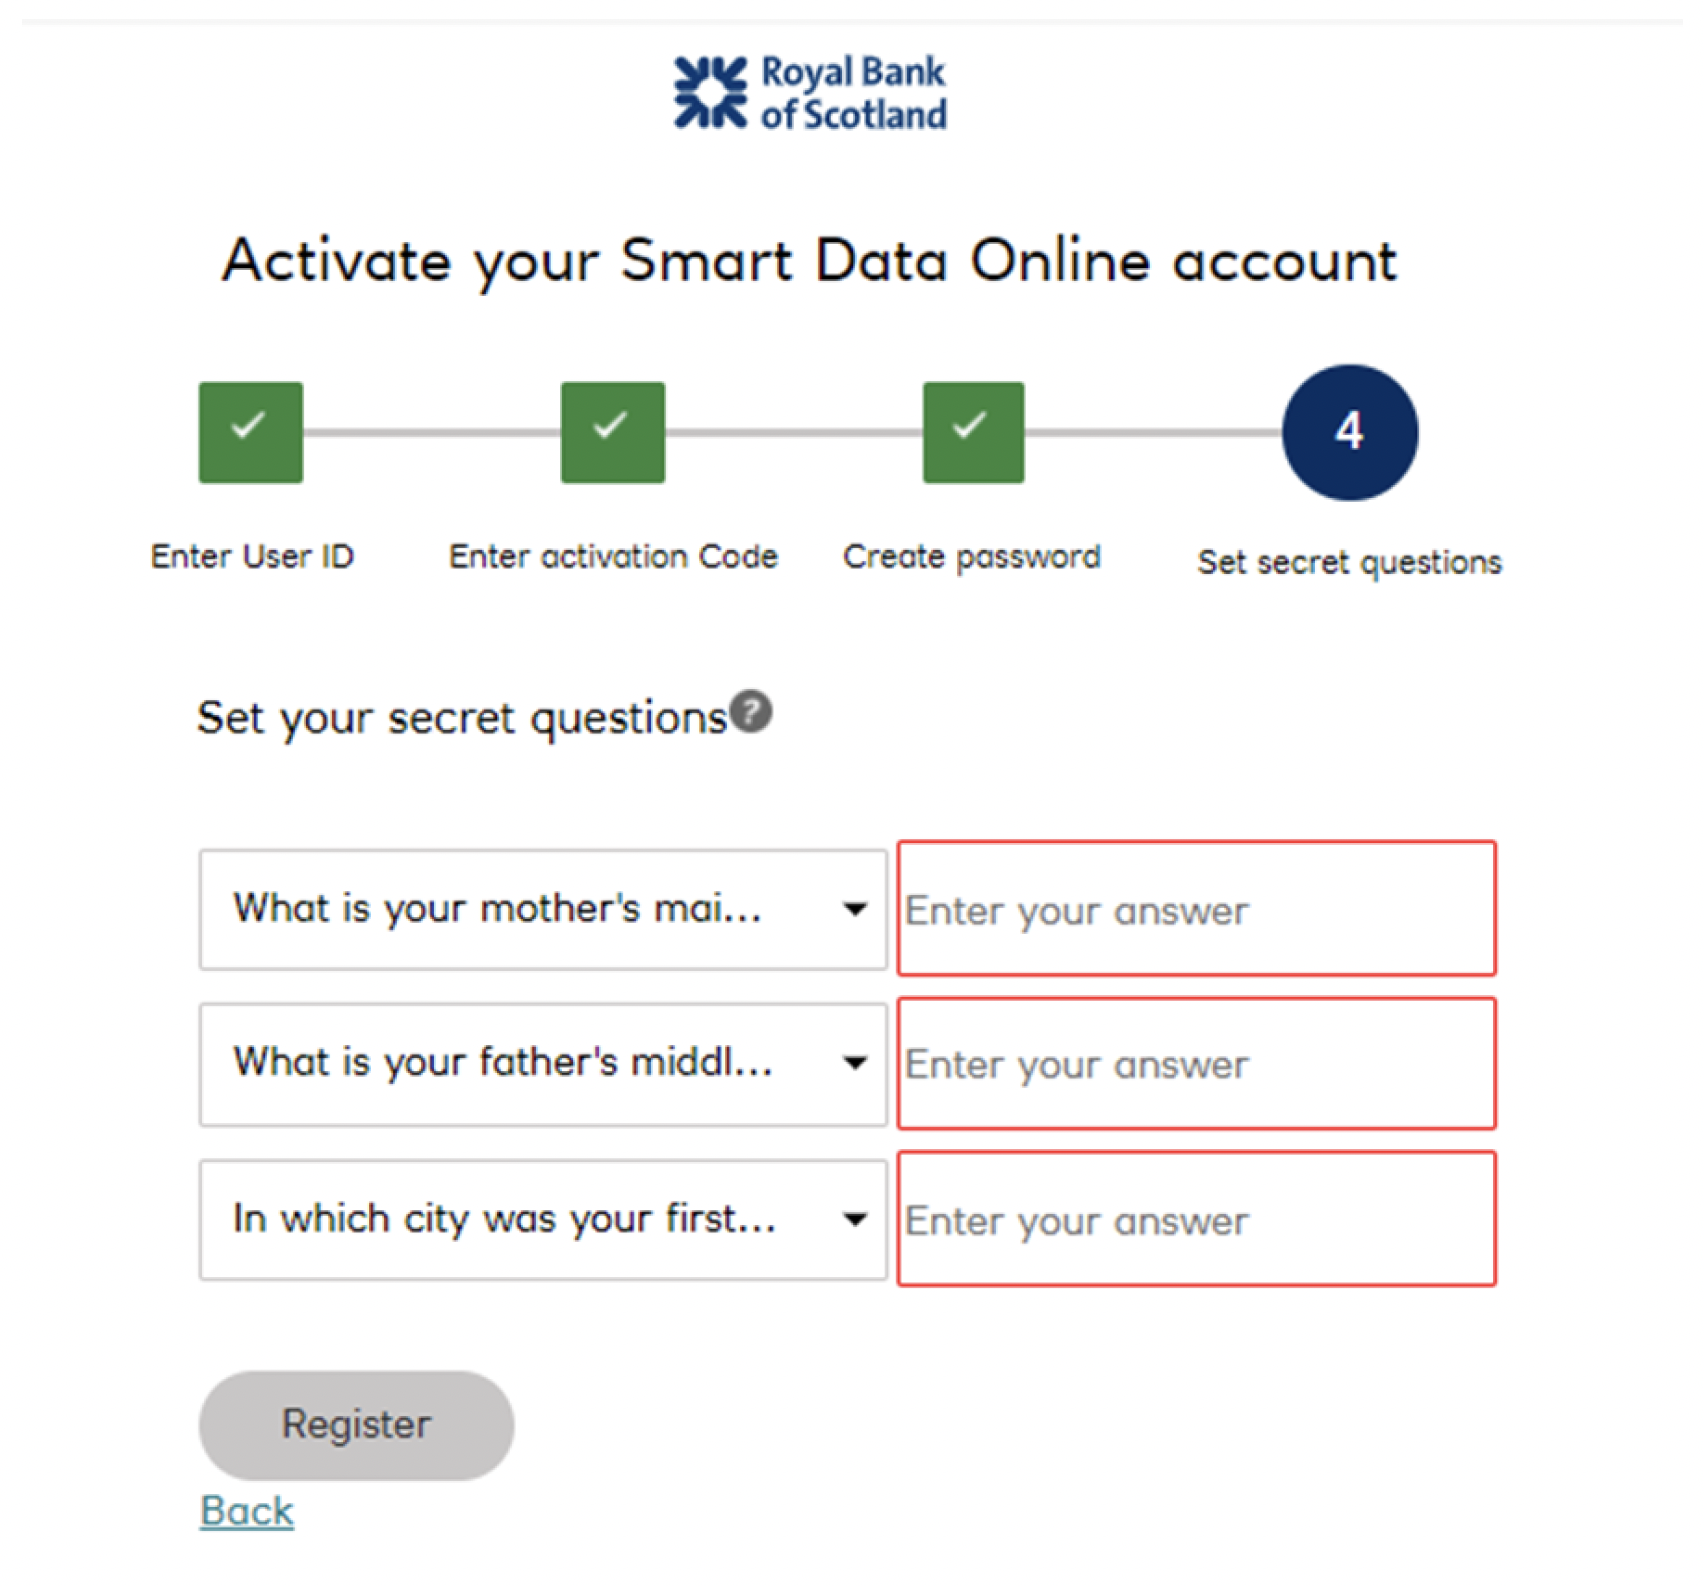 RBS Smart Data Online account set secret questions screen’